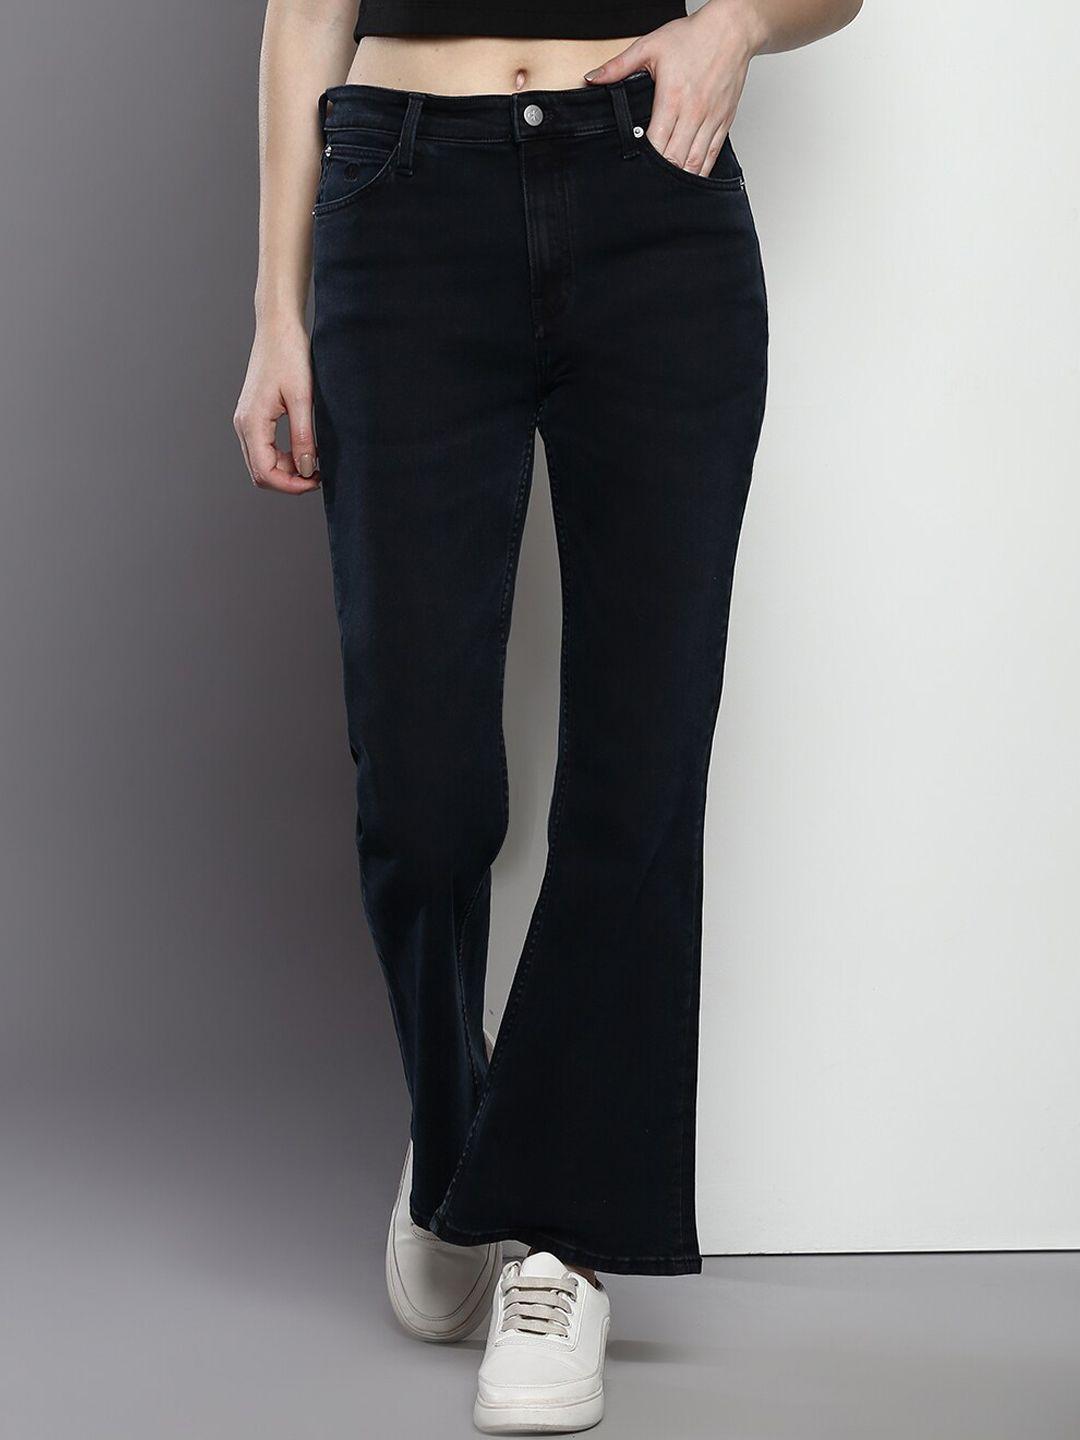 calvin klein jeans women bootcut stretchable jeans